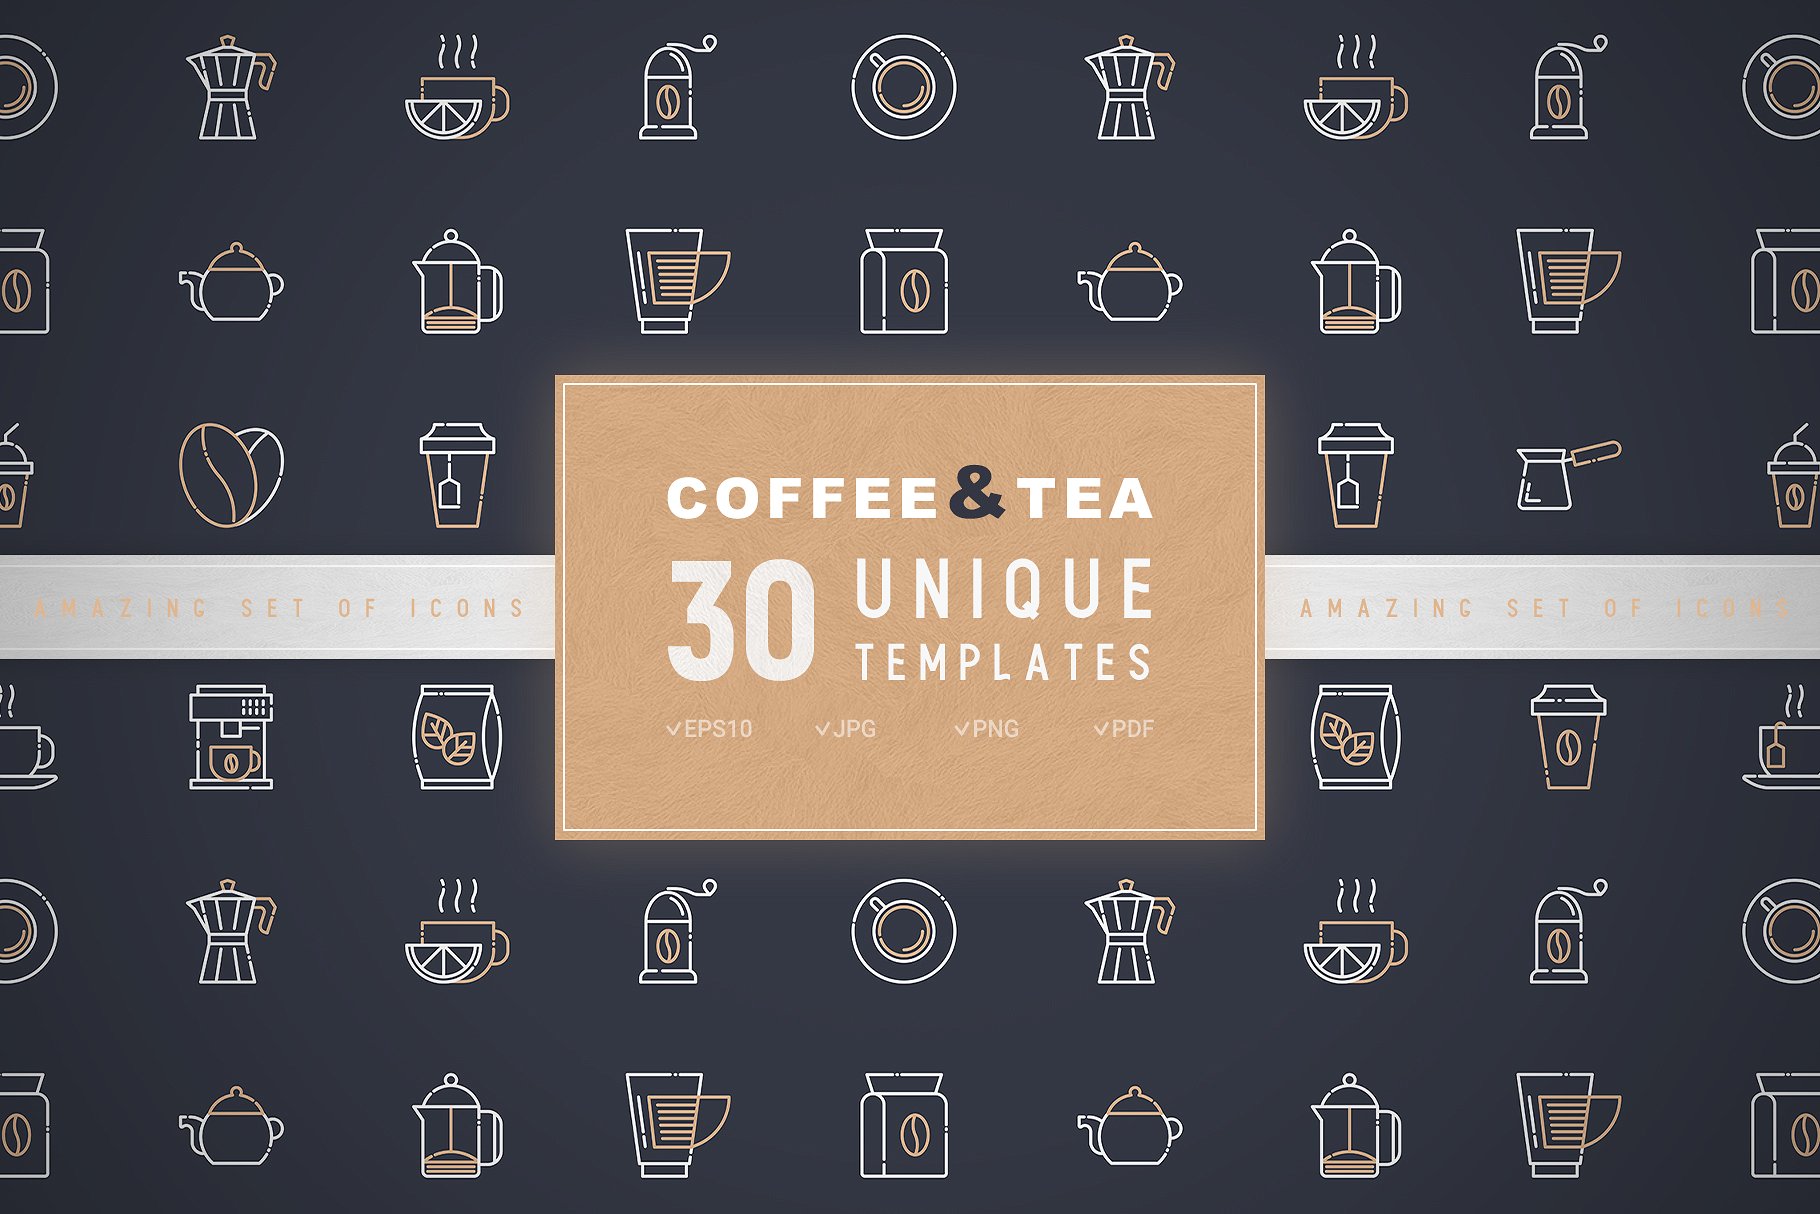 Unique coffee and tea icon set